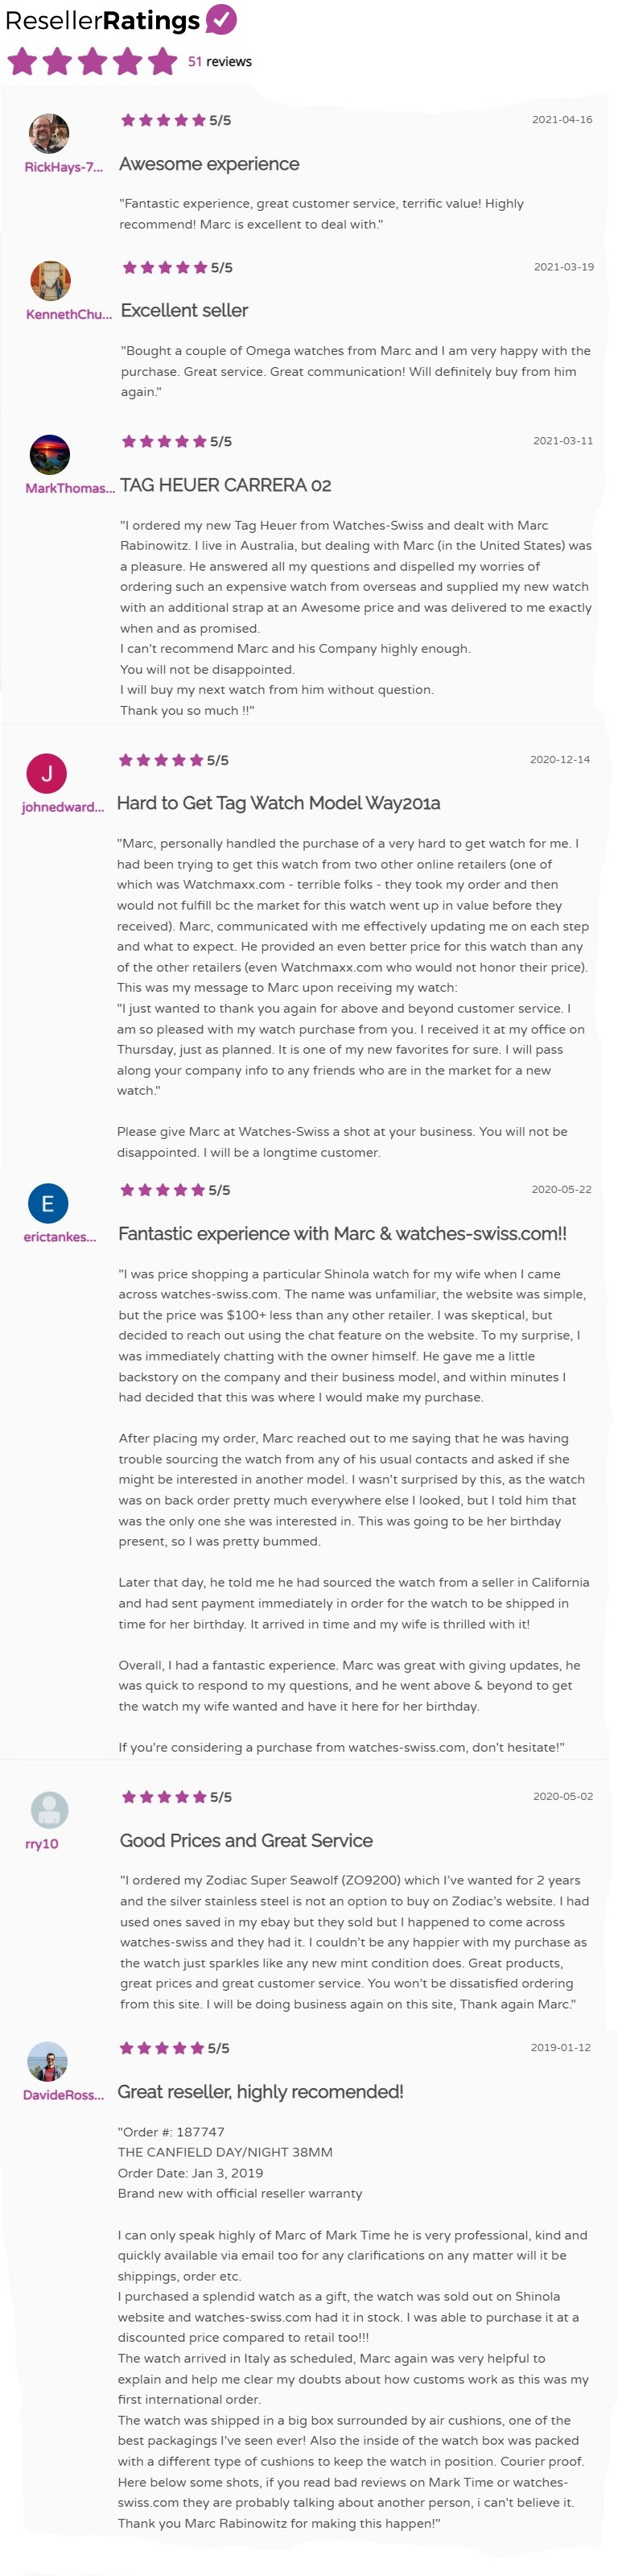 Watches-Swiss.com customer reviews